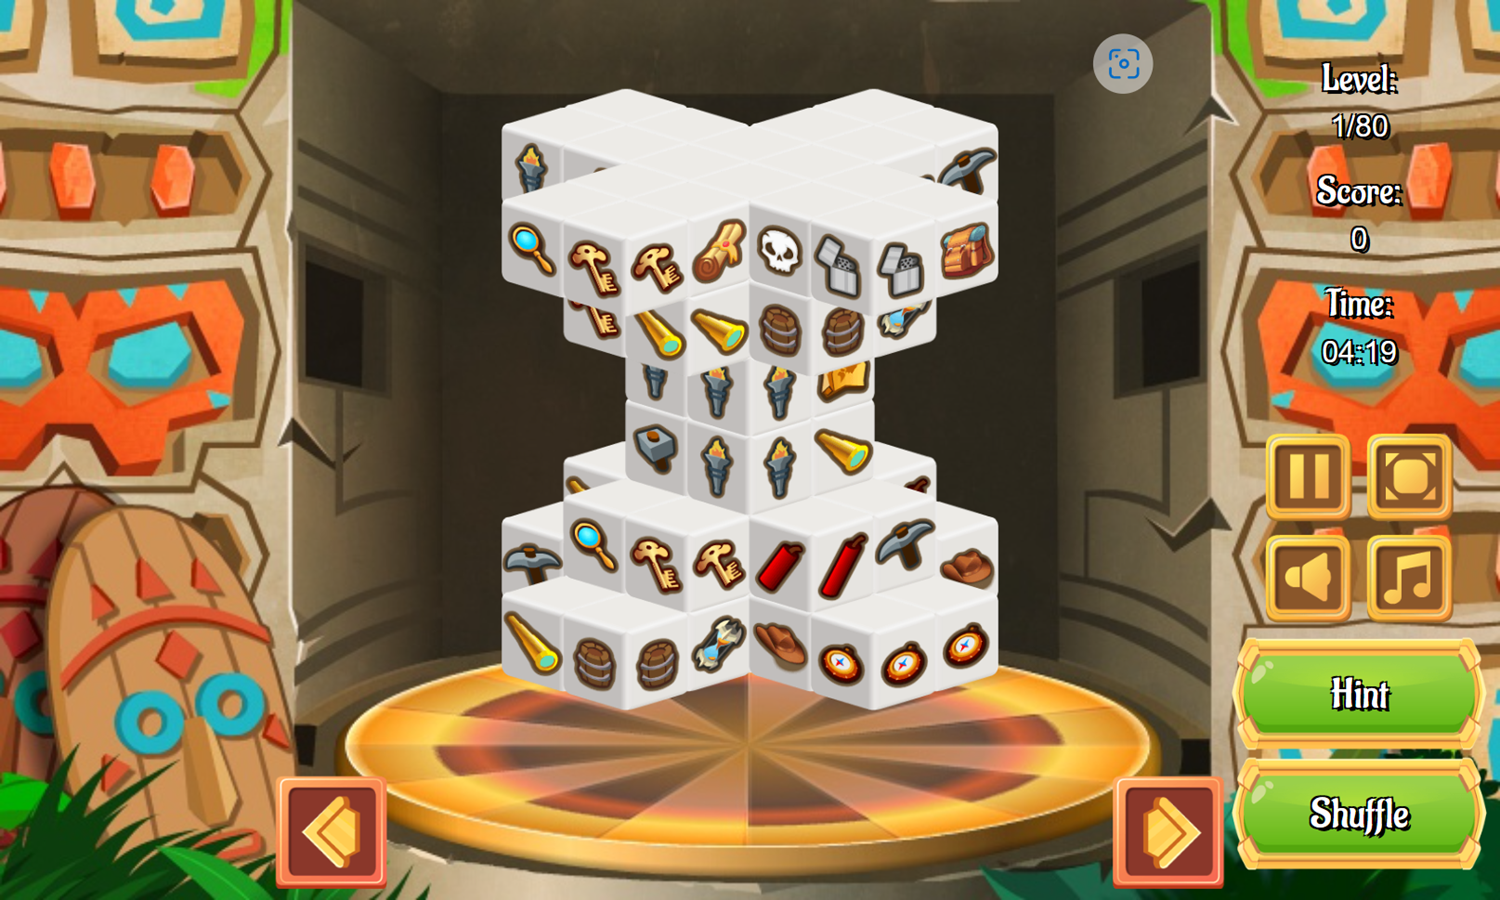 Travelers Quest Game Level Start Screenshot.